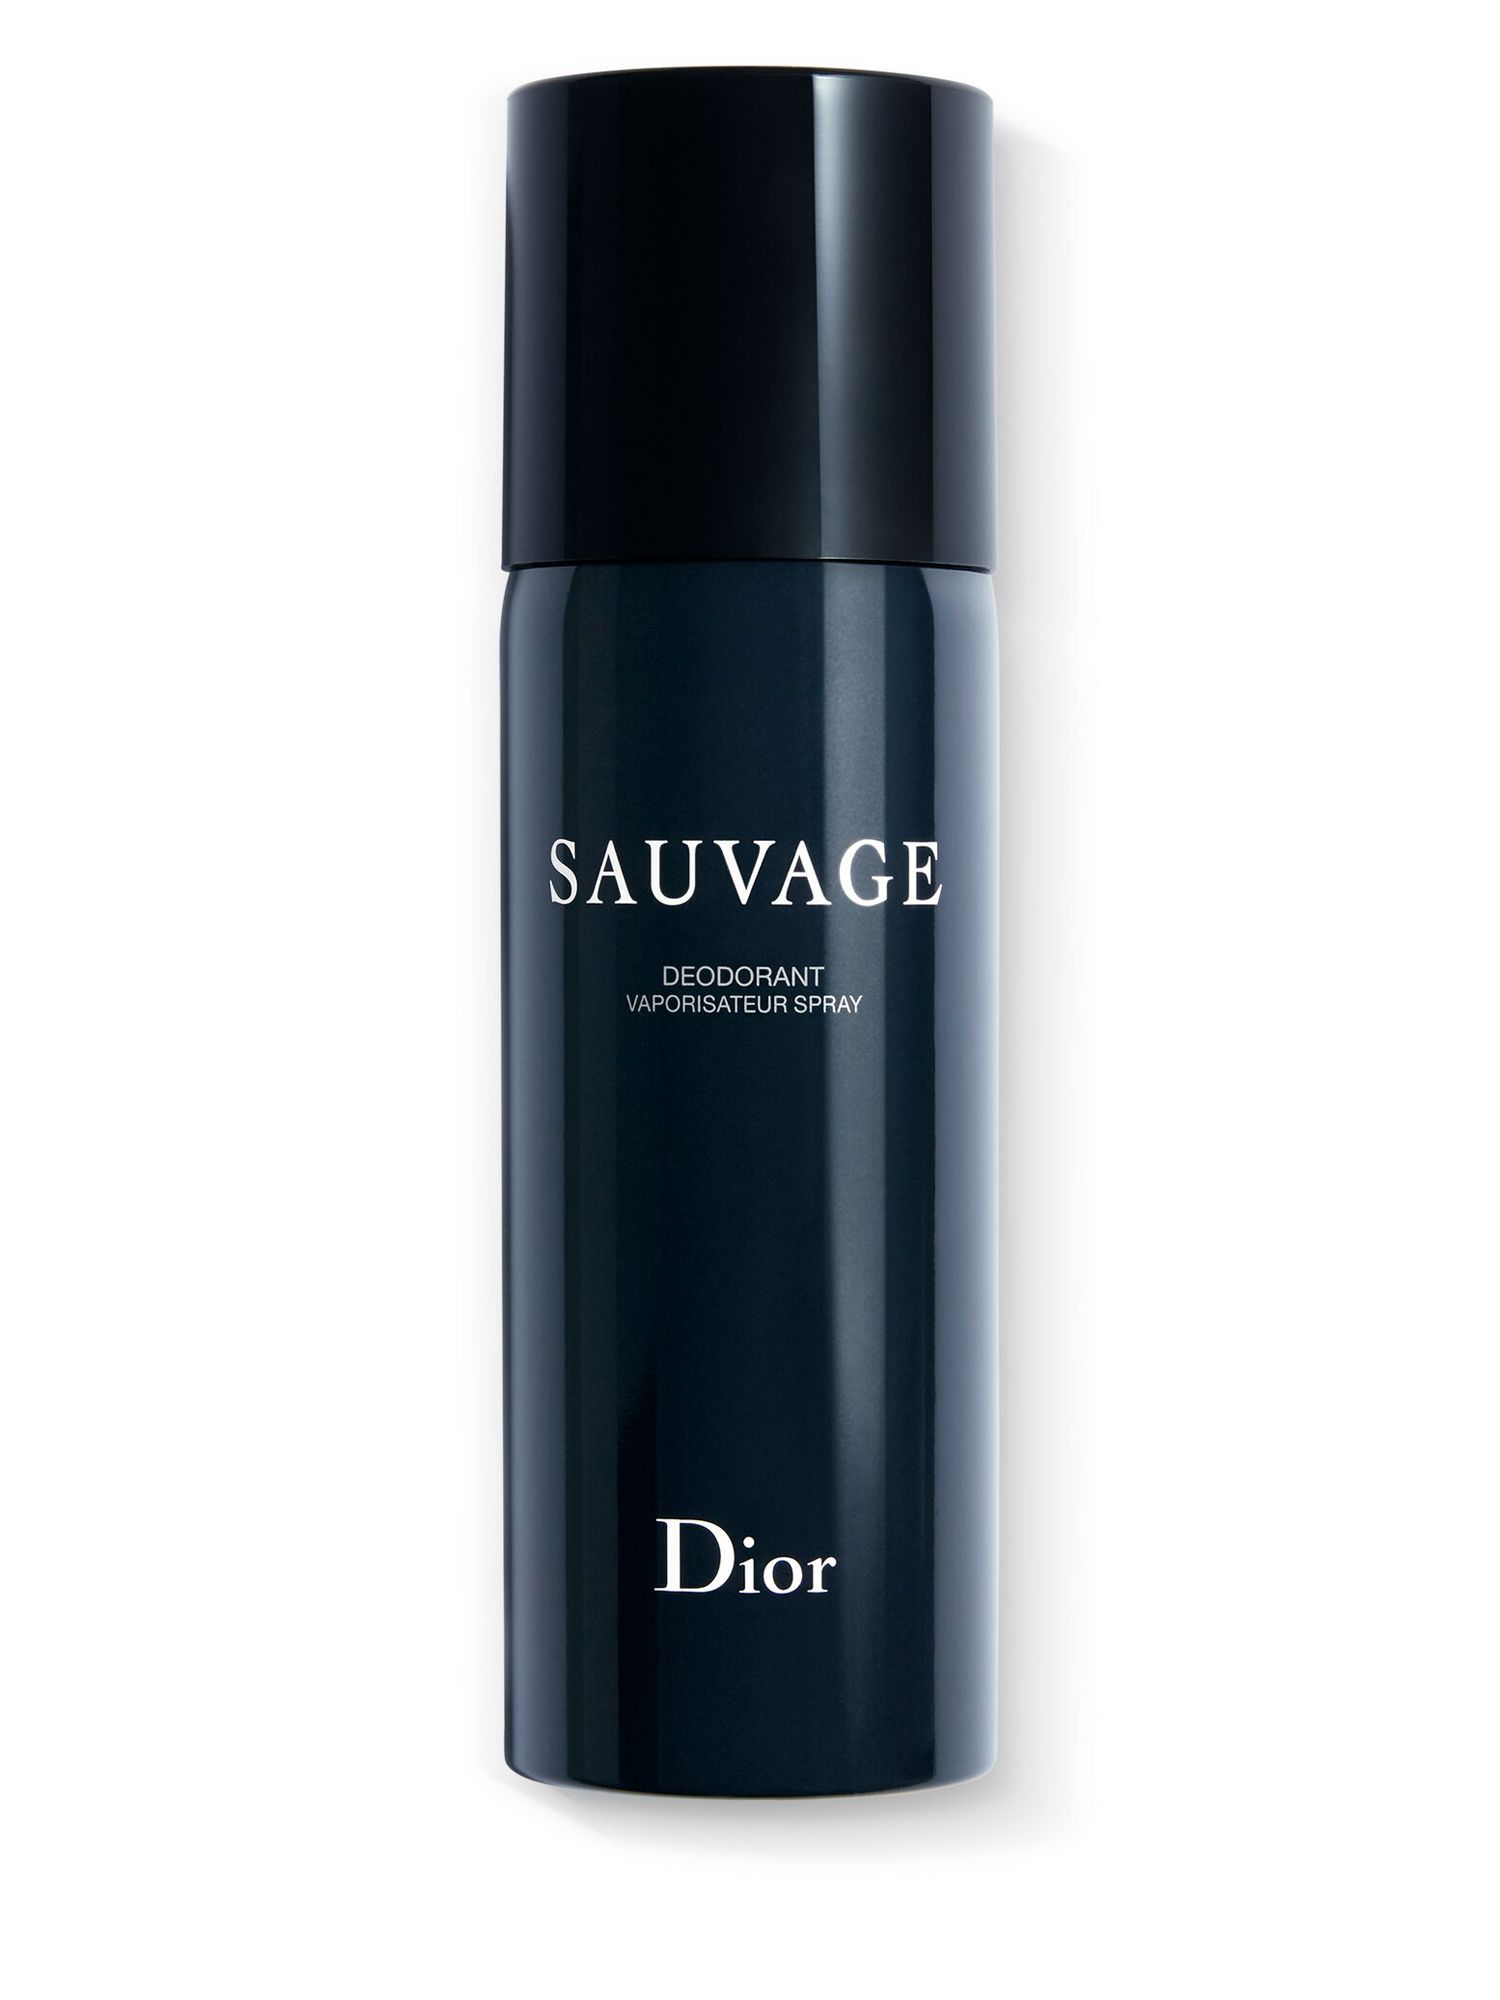 DIOR Sauvage Deodorant Spray, 150ml at John Lewis Partners